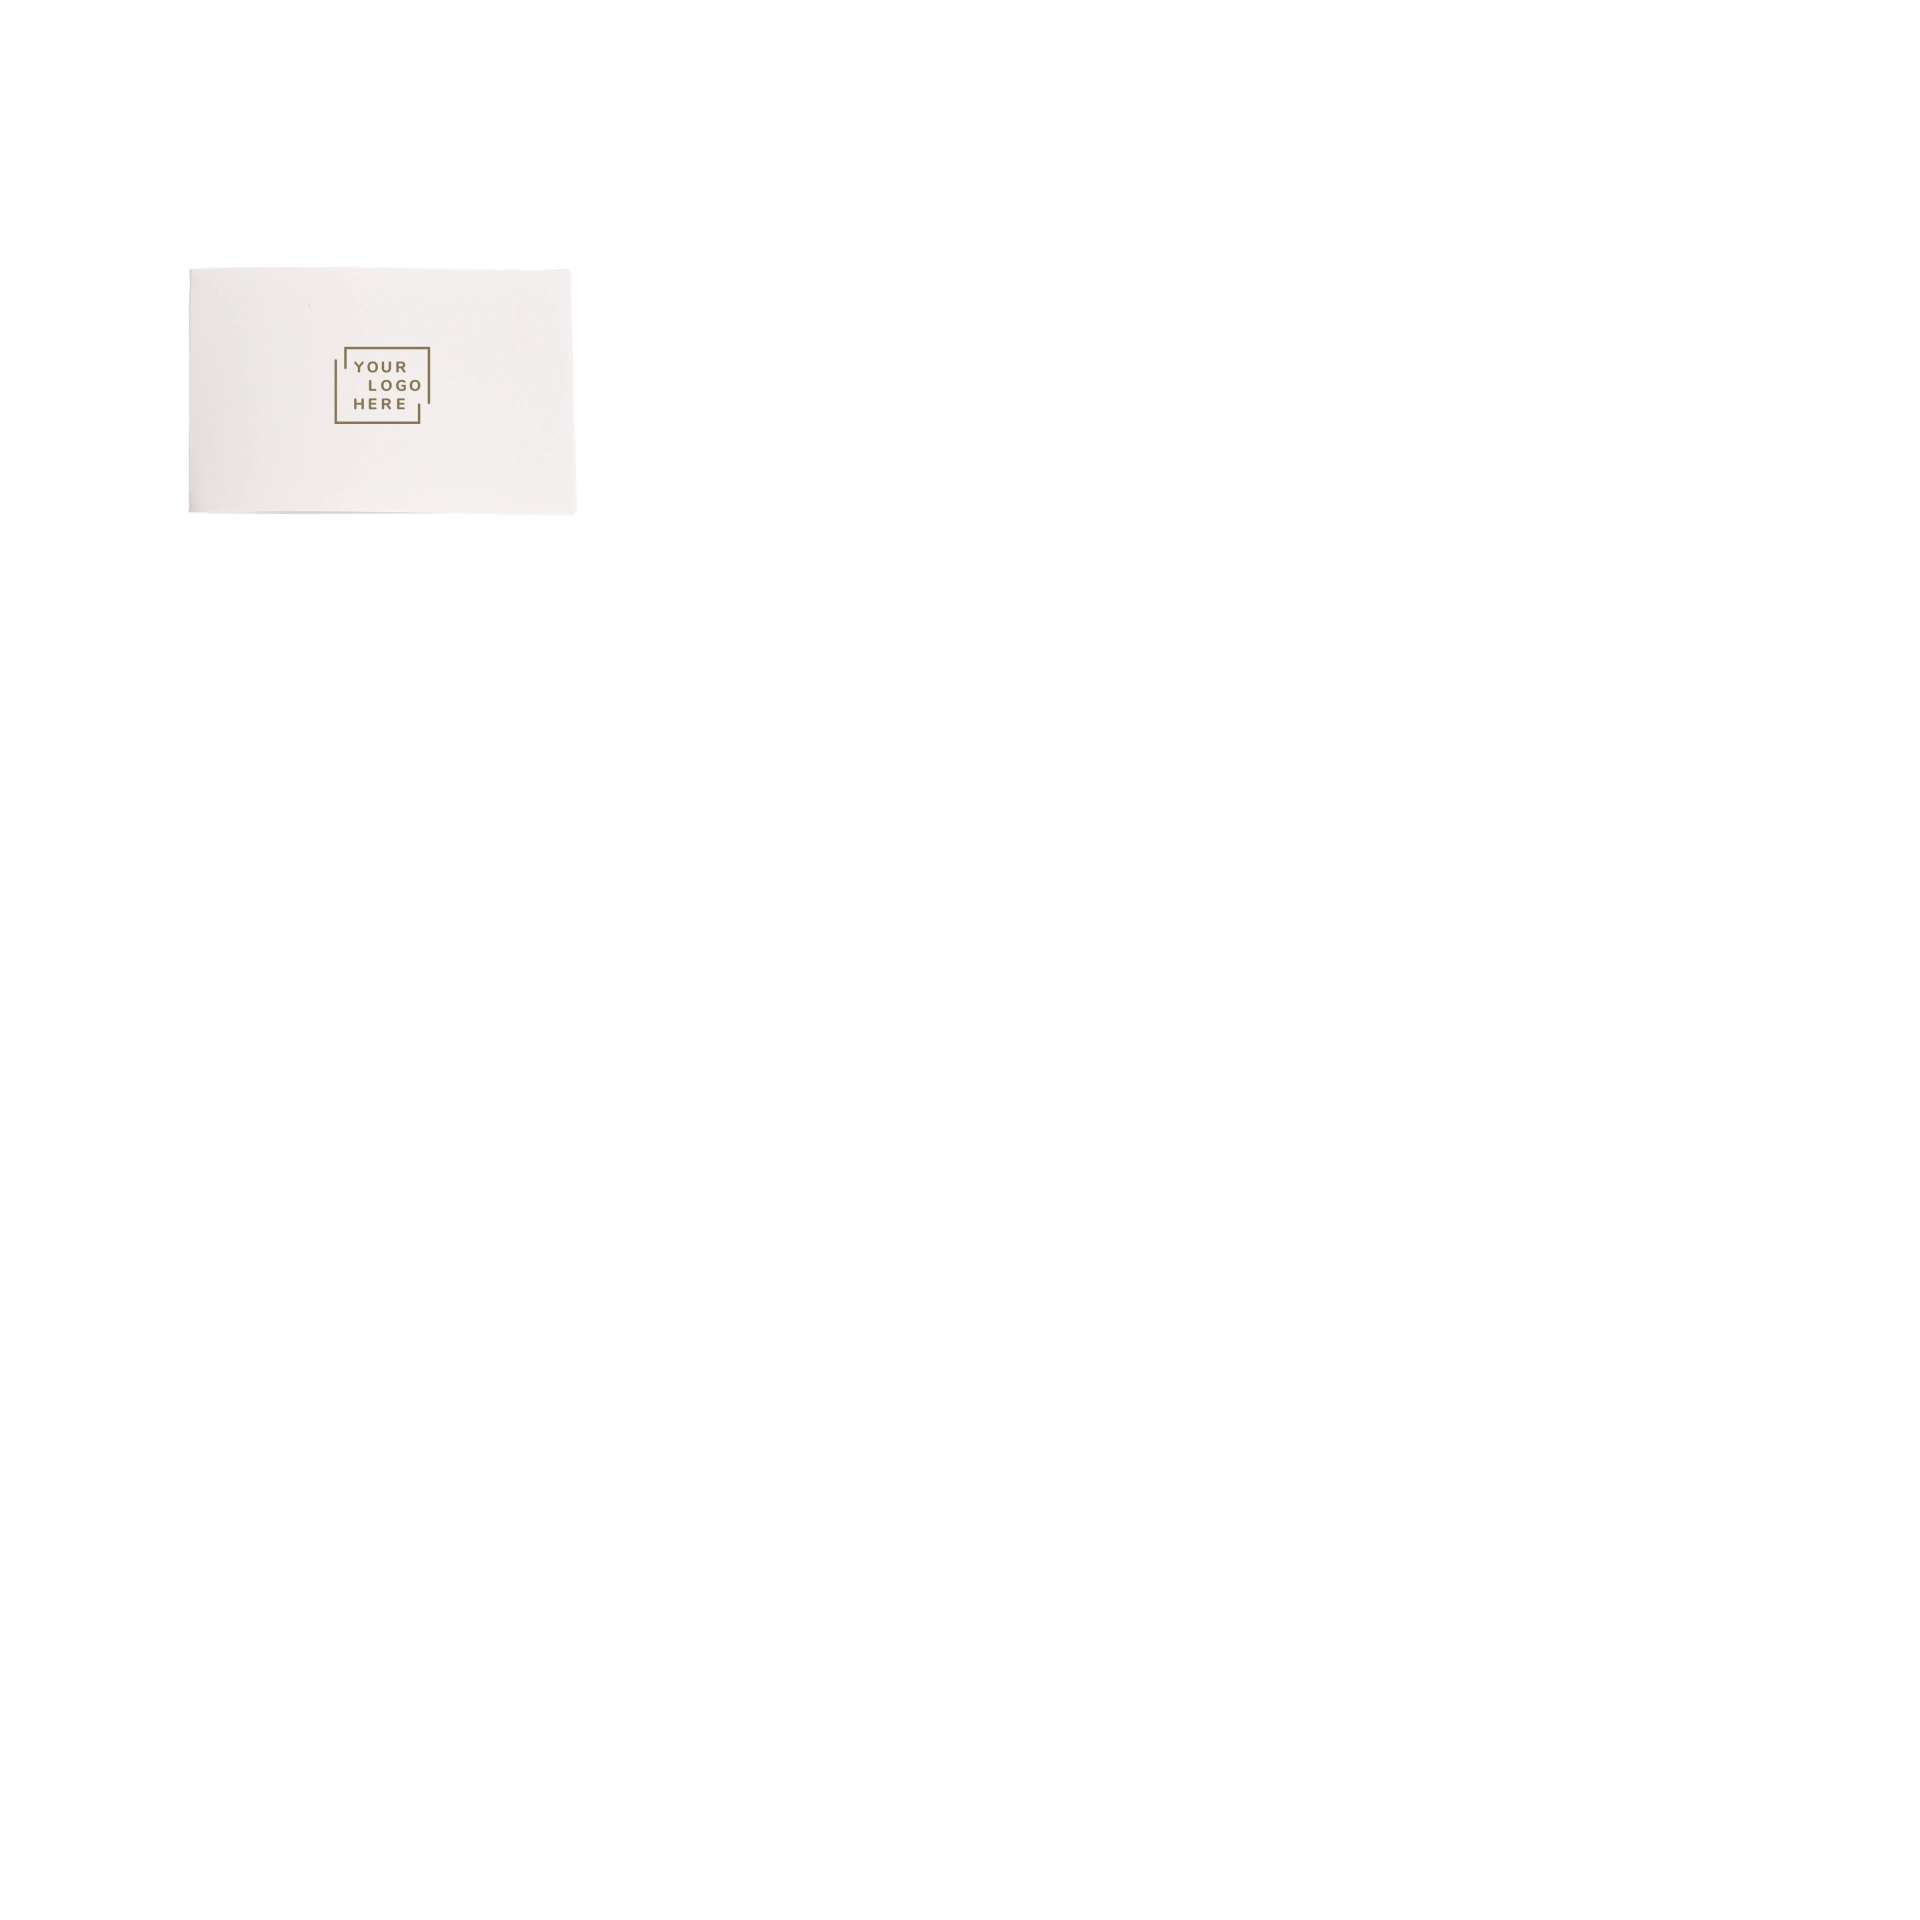 Schlüsseletuikarte | E3 Papier Freelife Wellum white 11x7 cm | 260 g/m²  